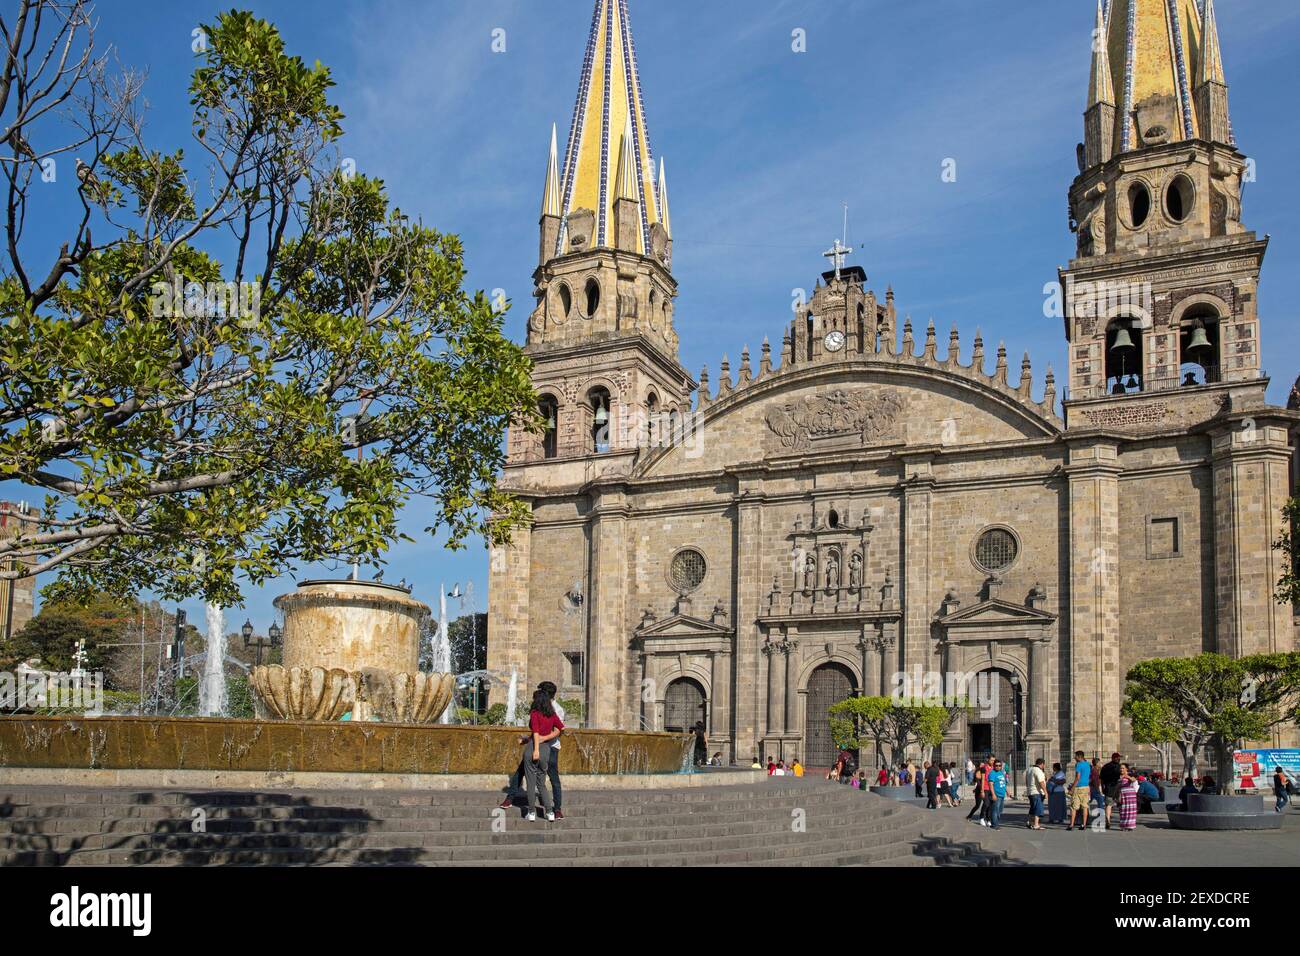 Spanische Renaissance Kathedrale der Himmelfahrt unserer Lieben Frau / Catedral de la Asunción de María Santísima in der Stadt Guadalajara, Jalisco, Mexiko Stockfoto